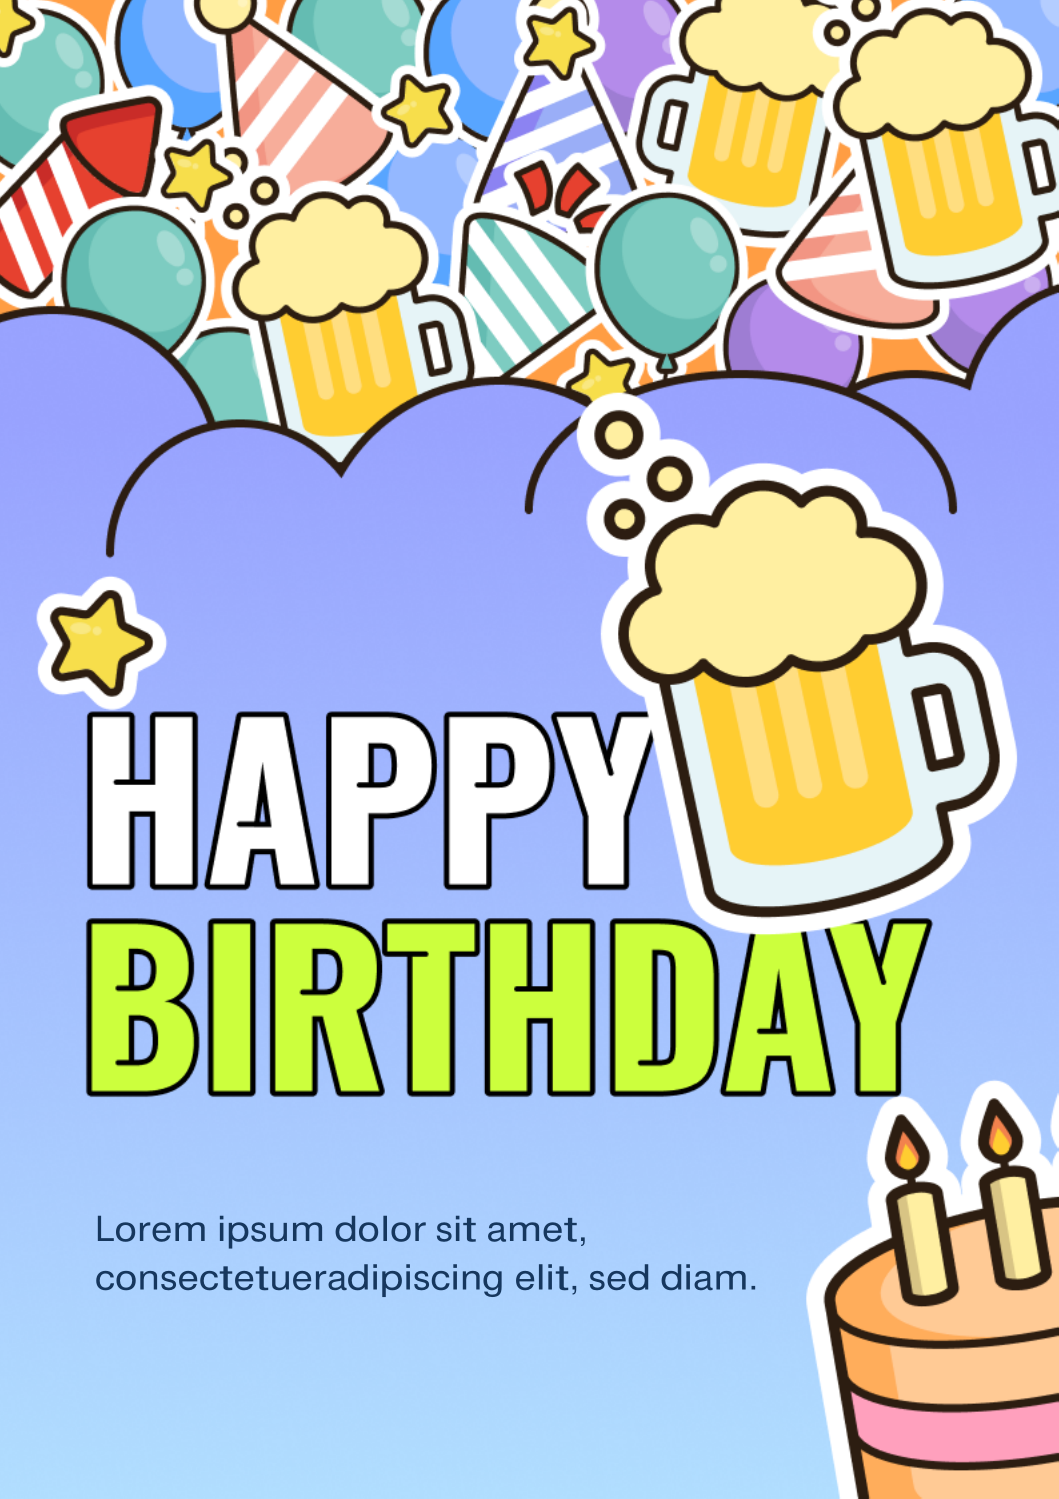 Birthday wishes card for nephew